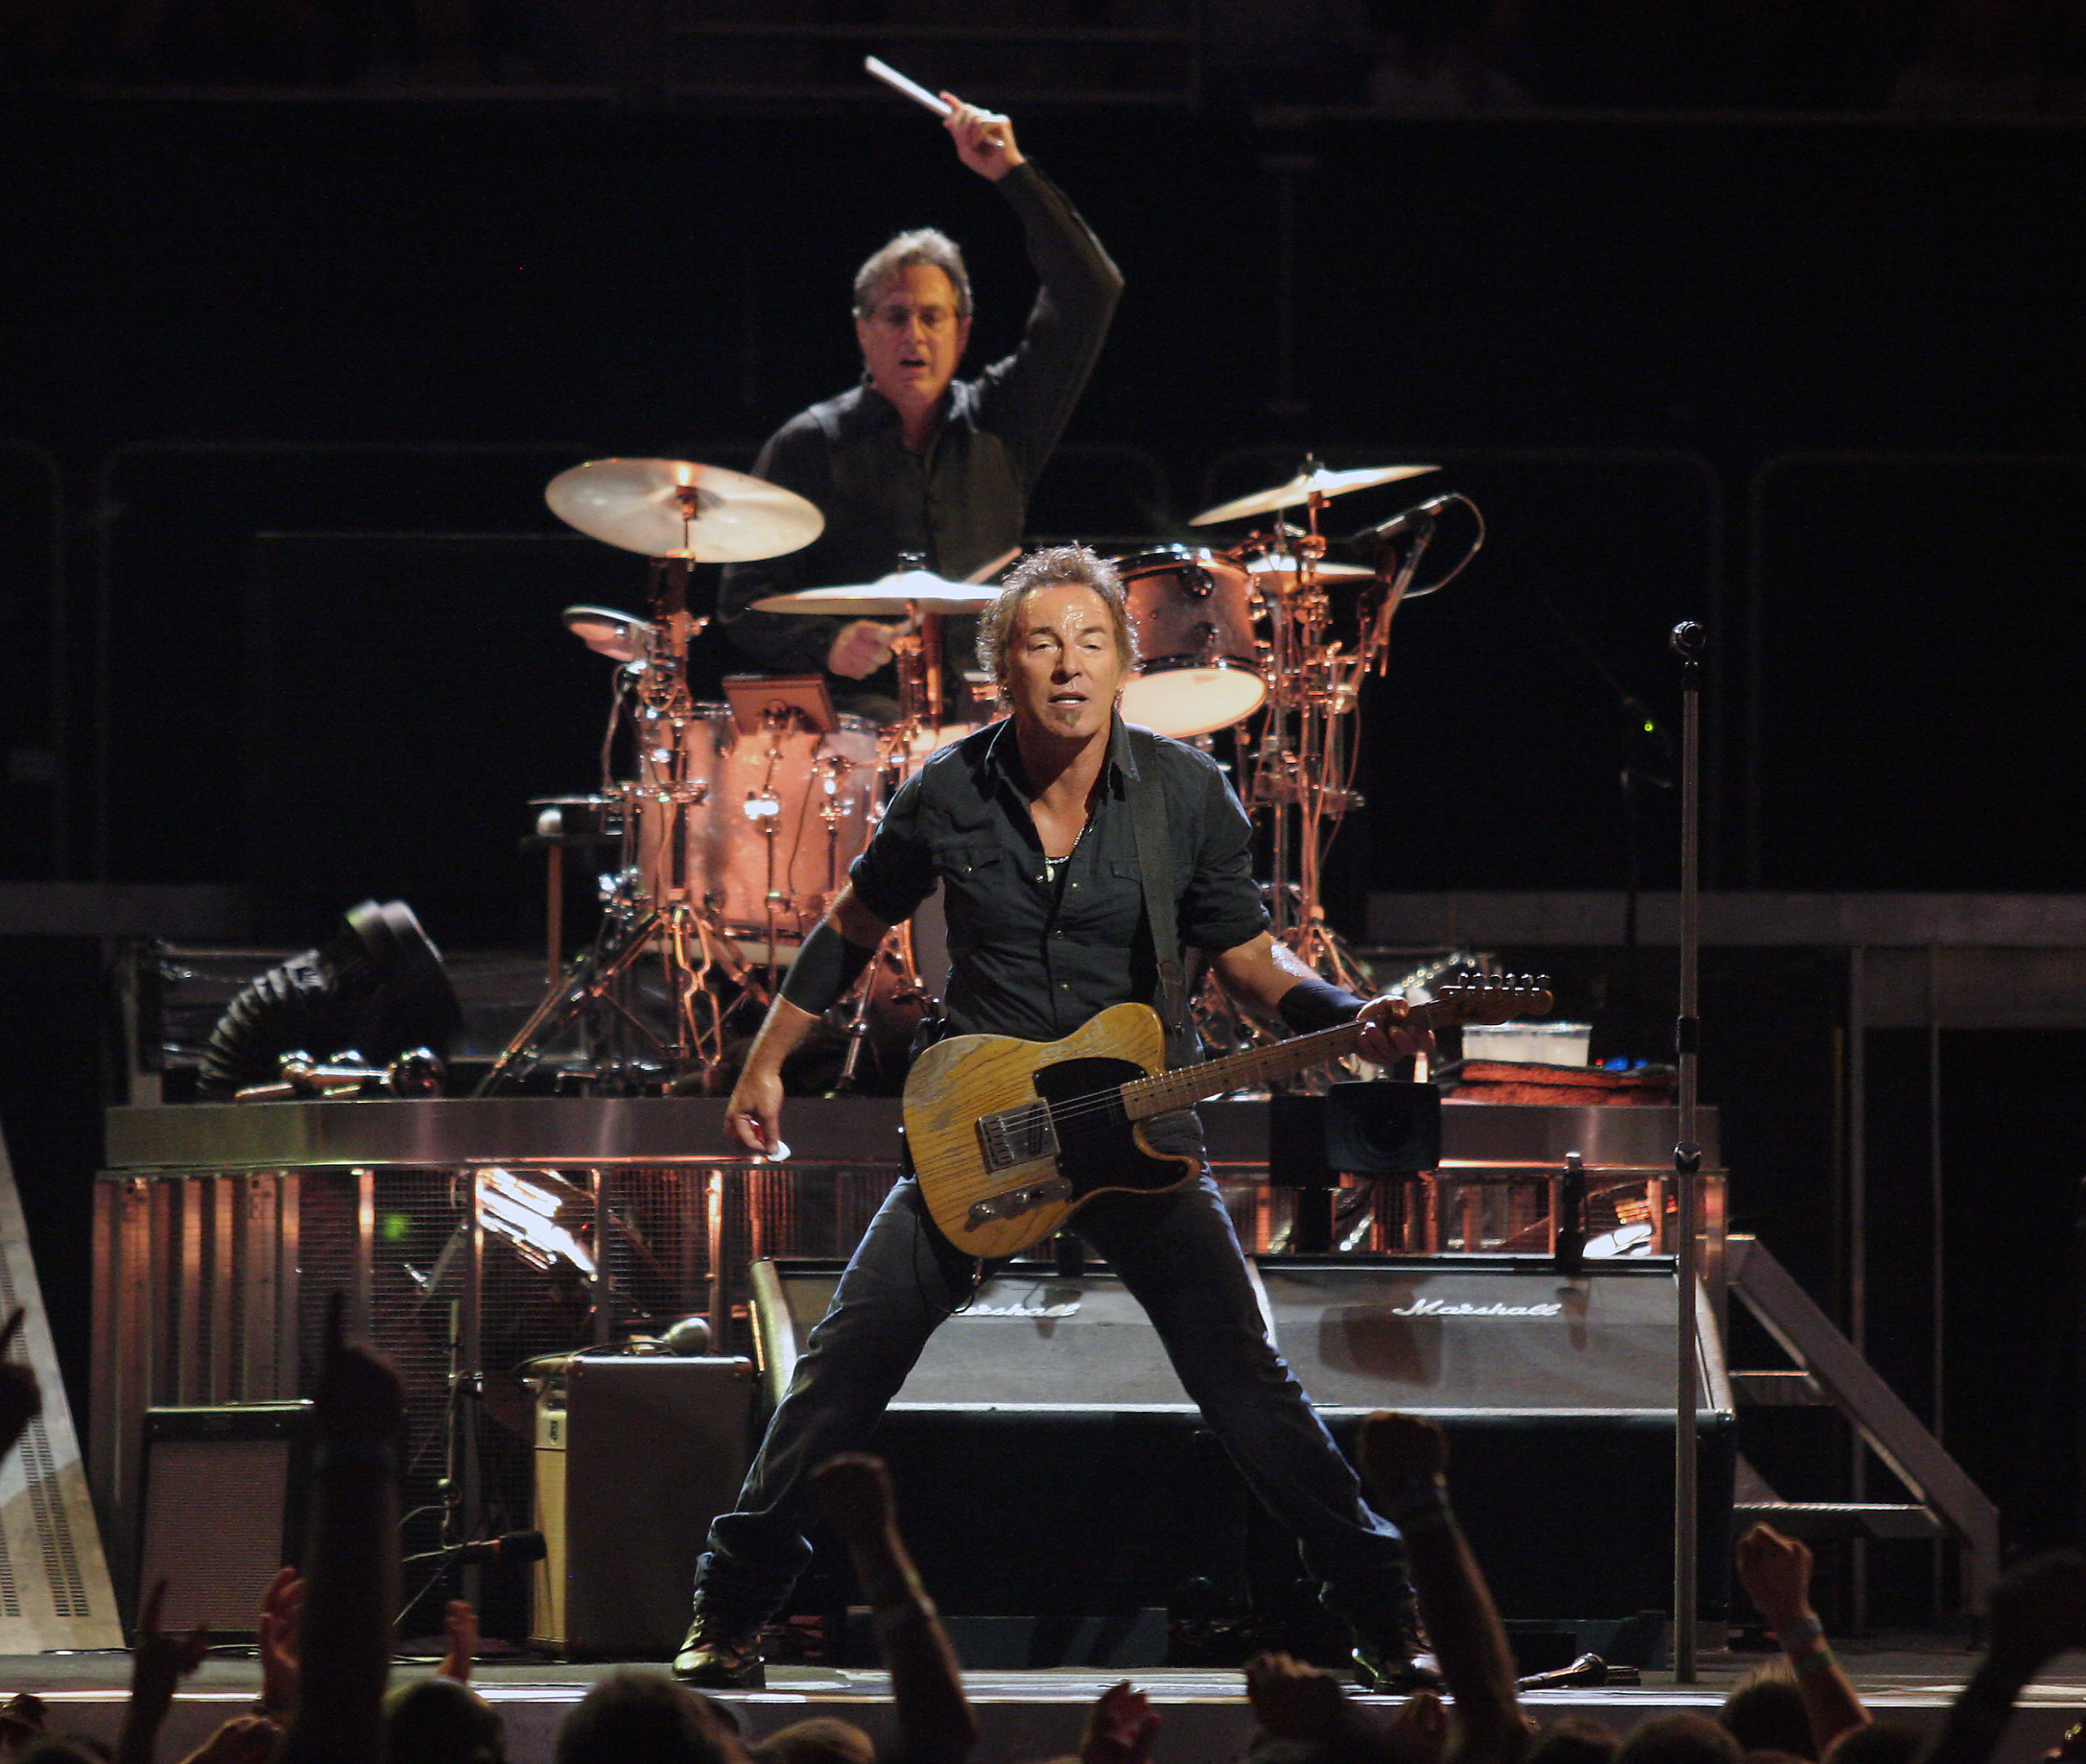 Bruce Springsteen - Born In The Usa - Tradução